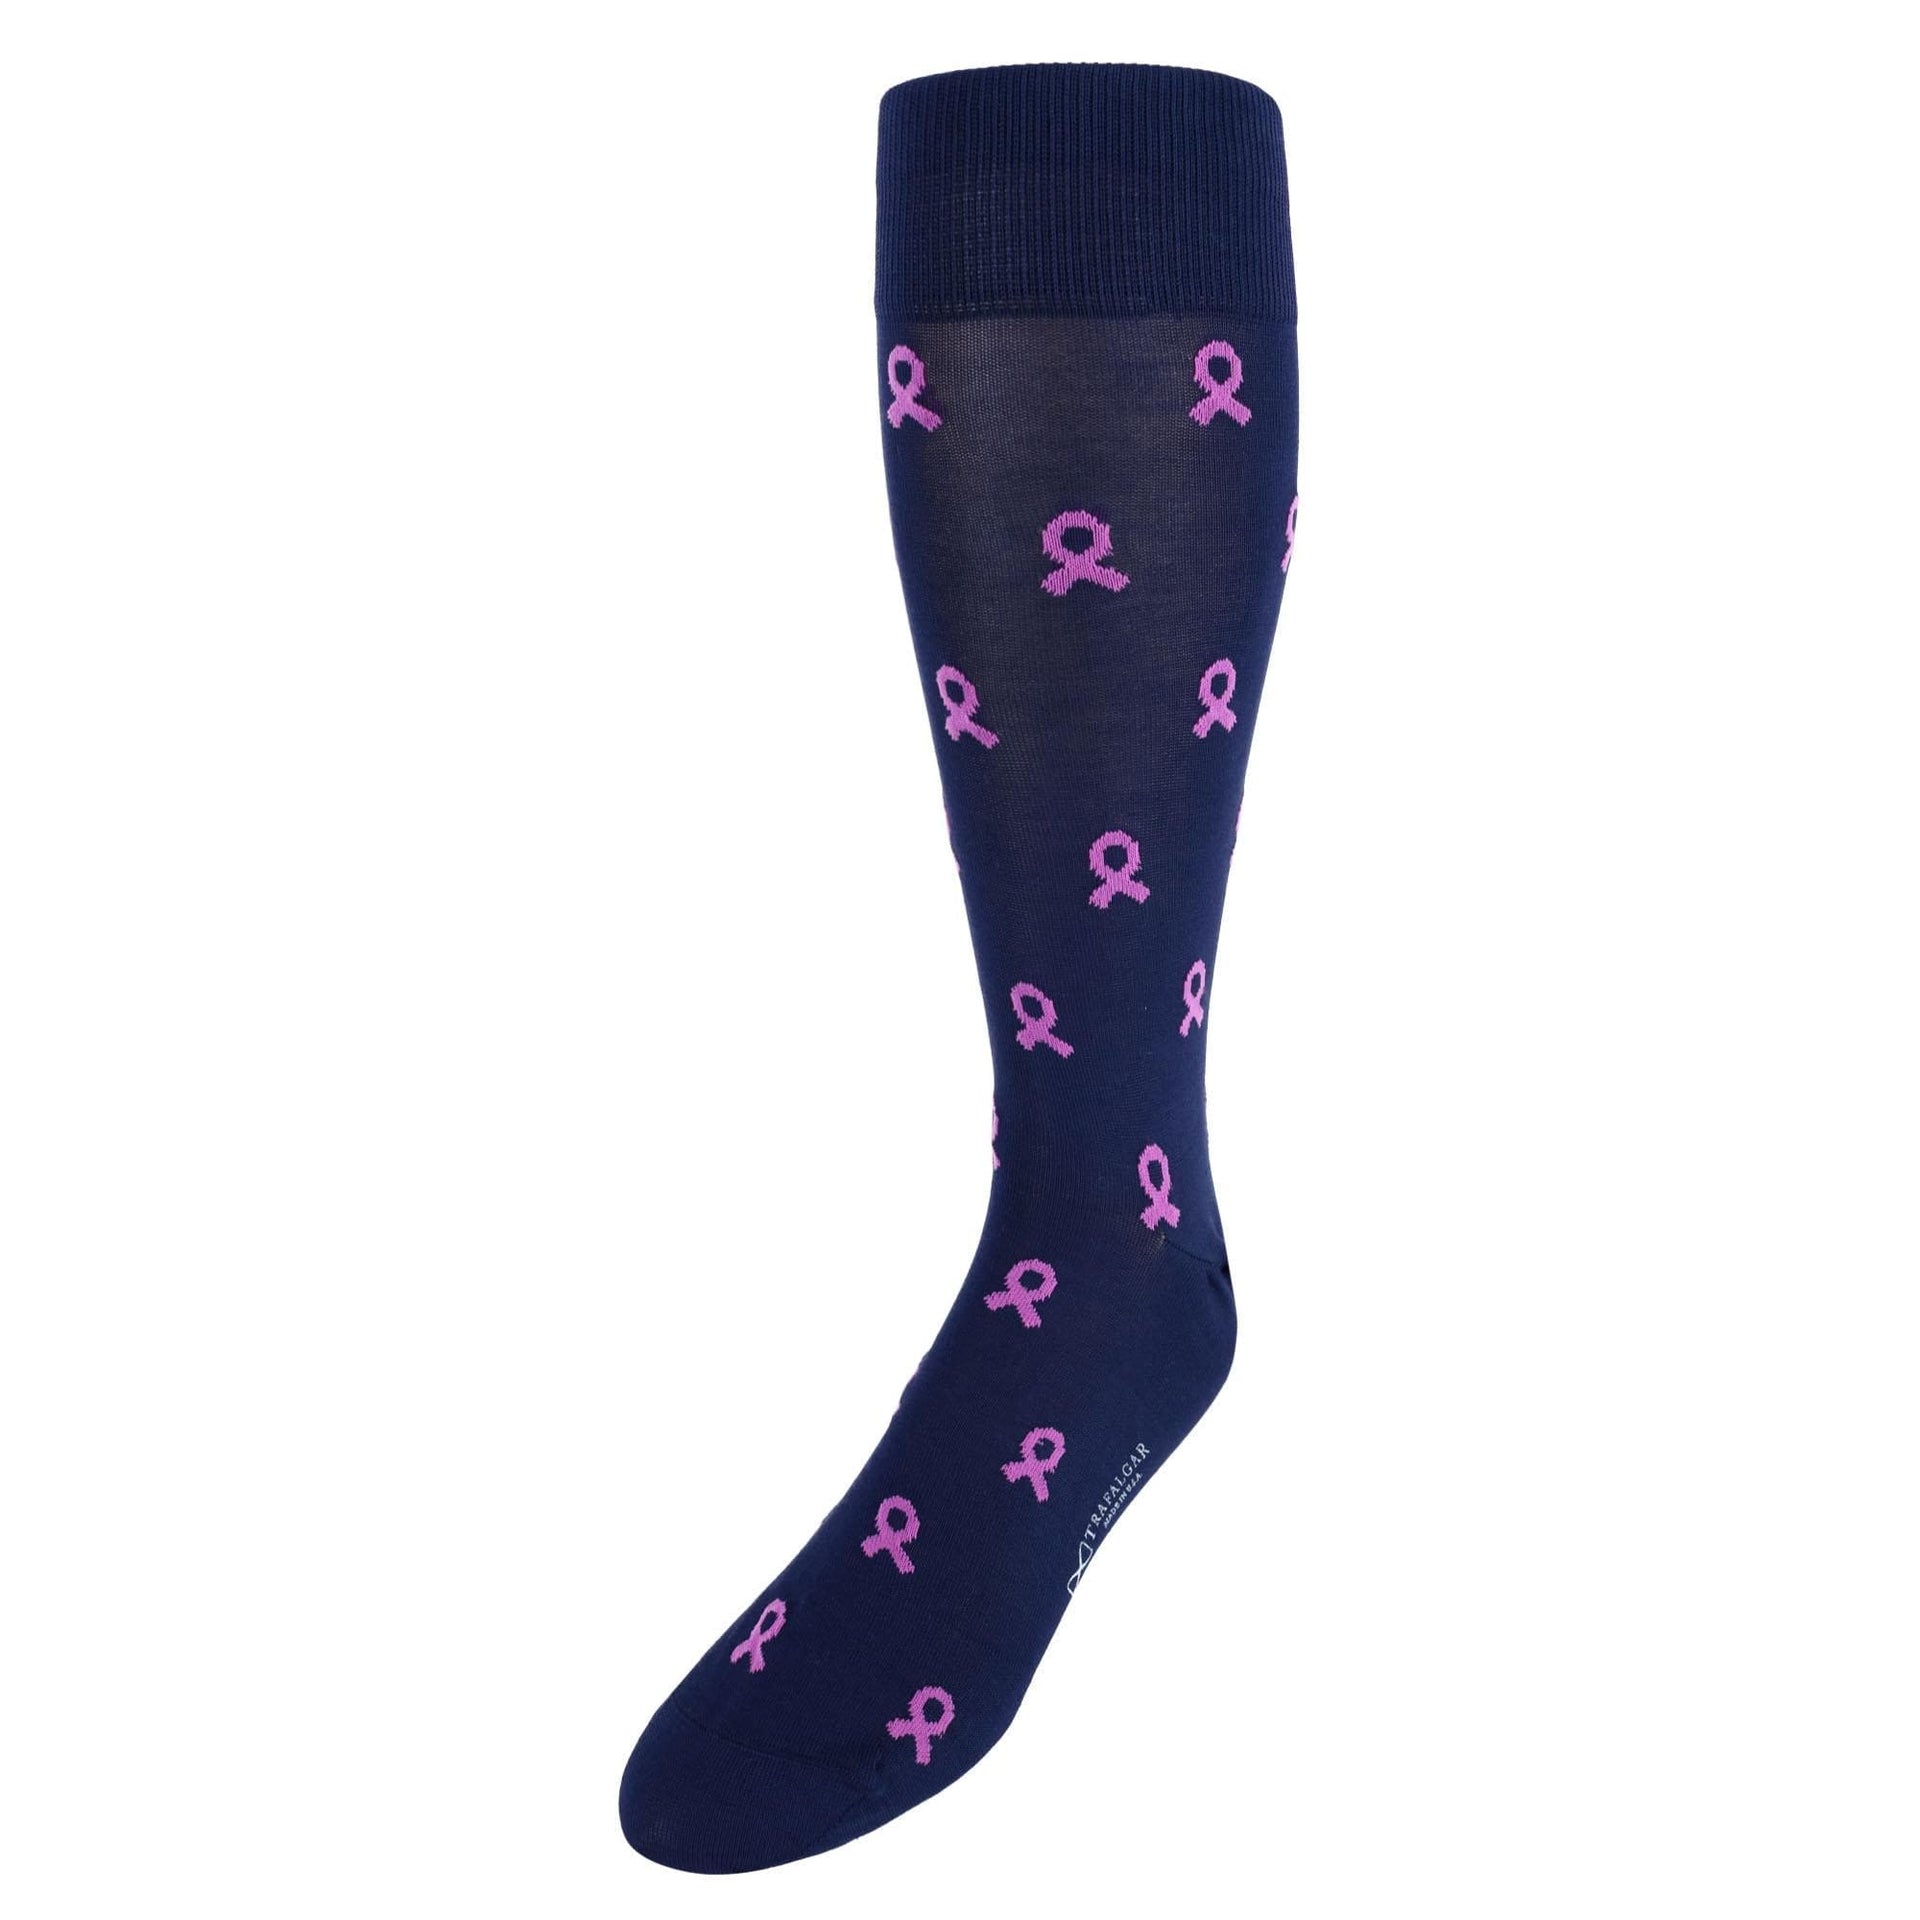 Breast Cancer Awareness Mid-Calf Mercerized Cotton Socks